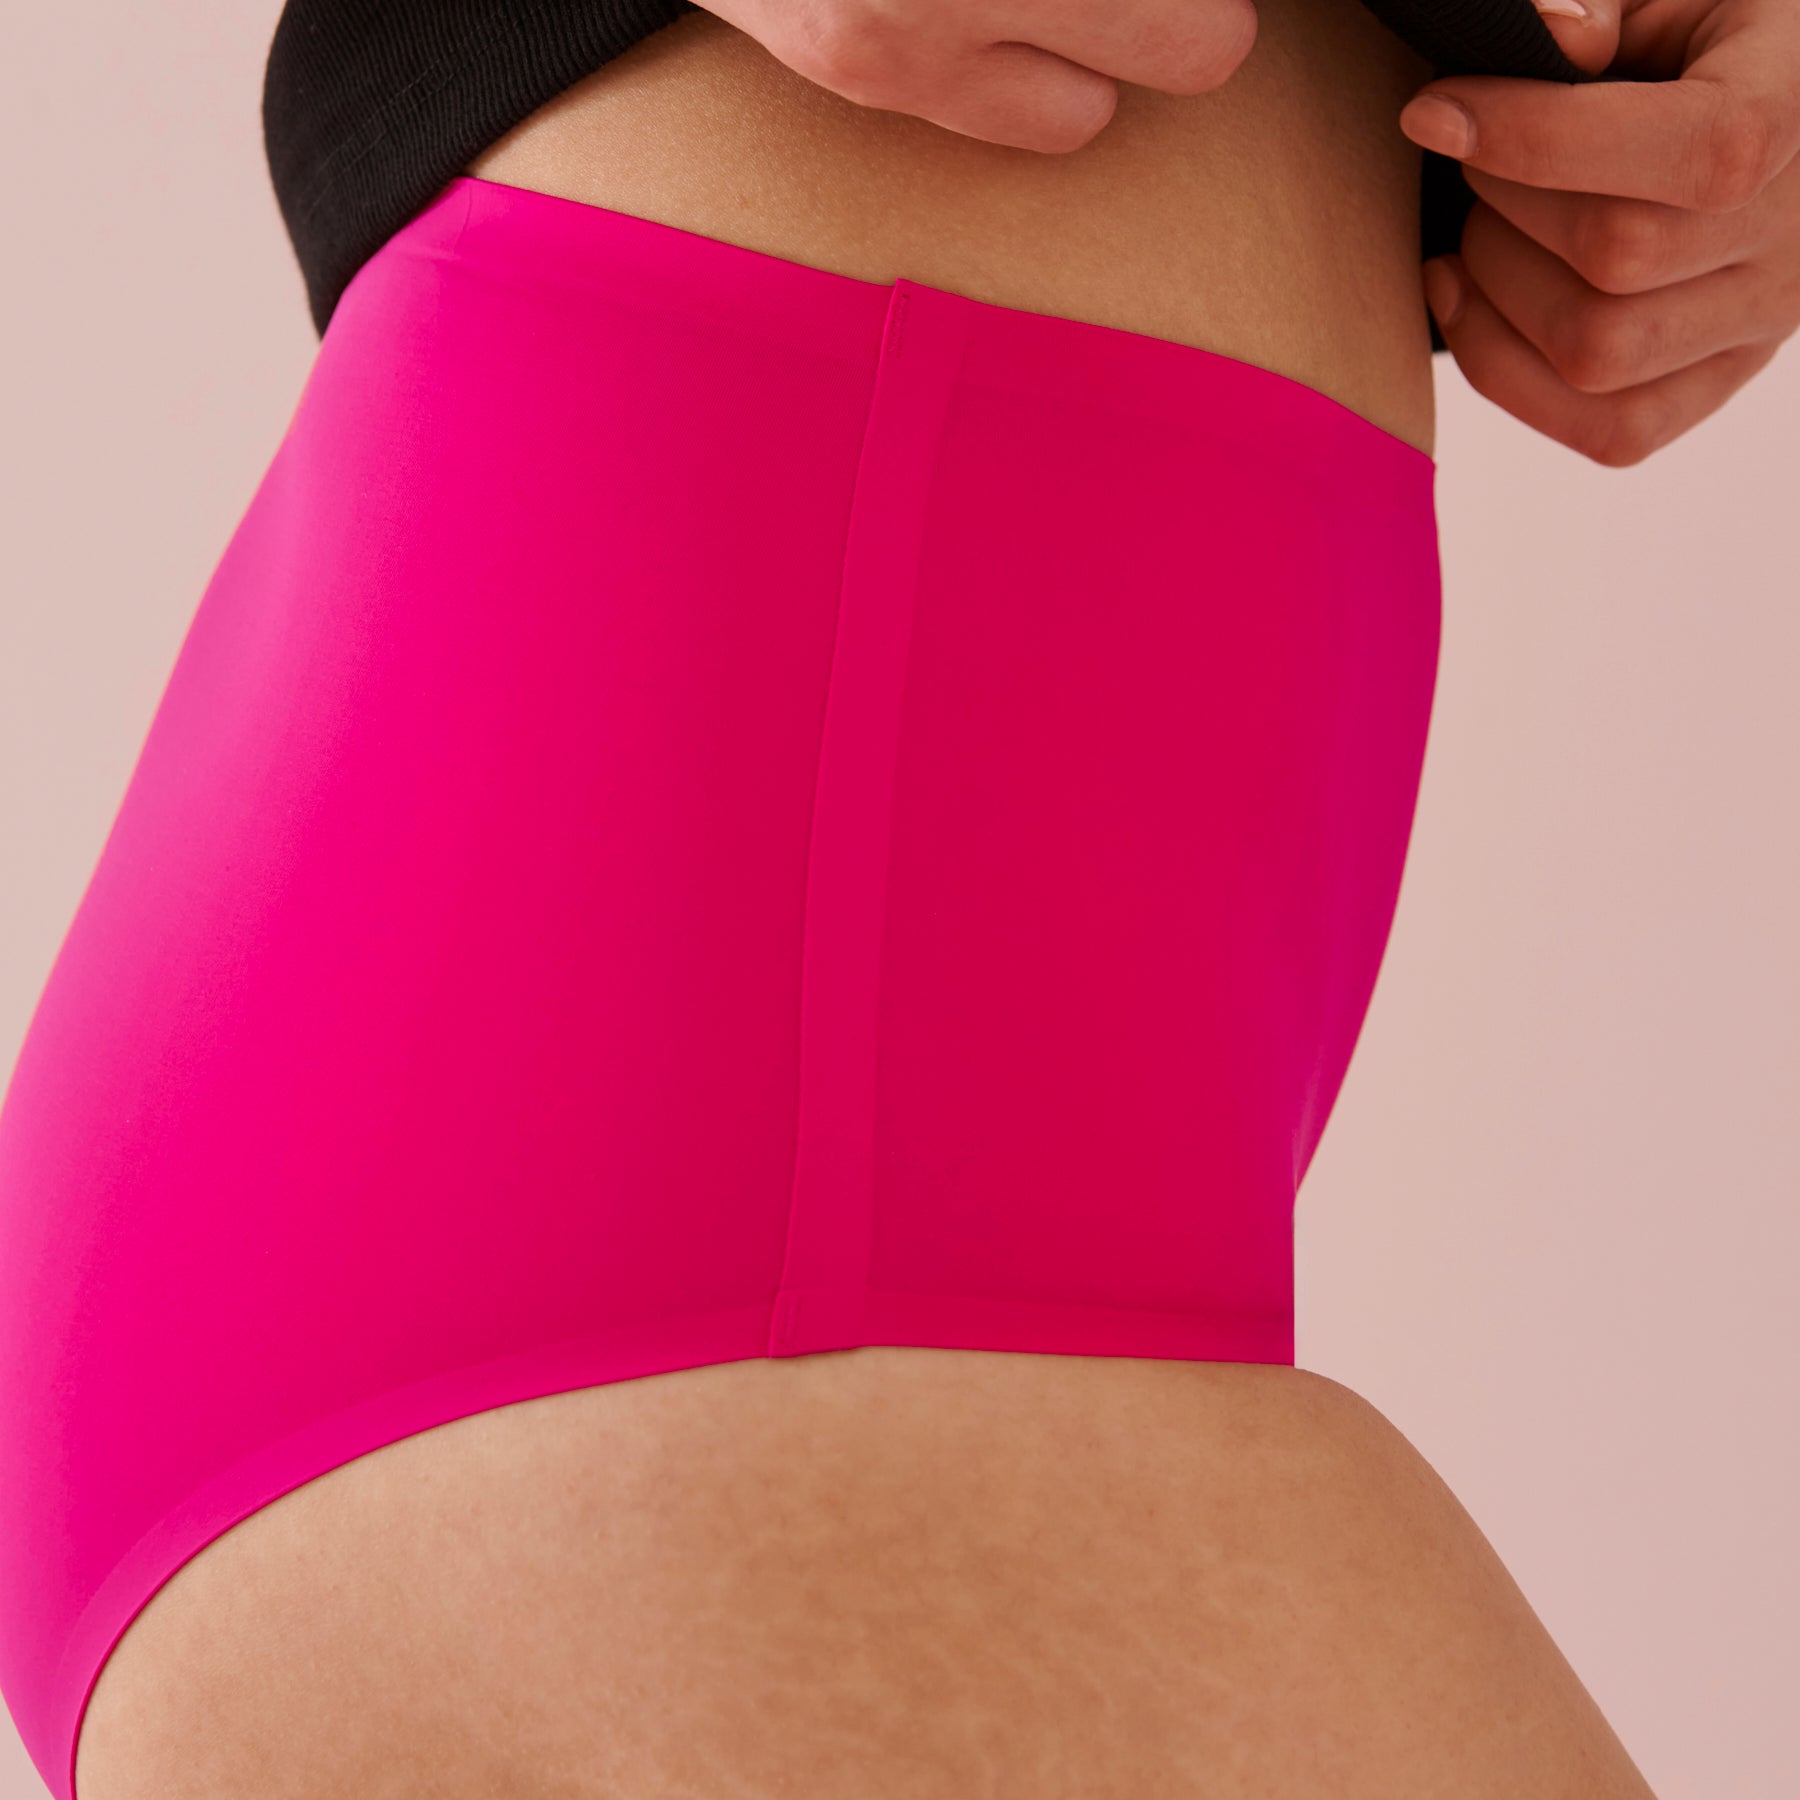 Side of the pink high waist bikini period panty - NEWEX